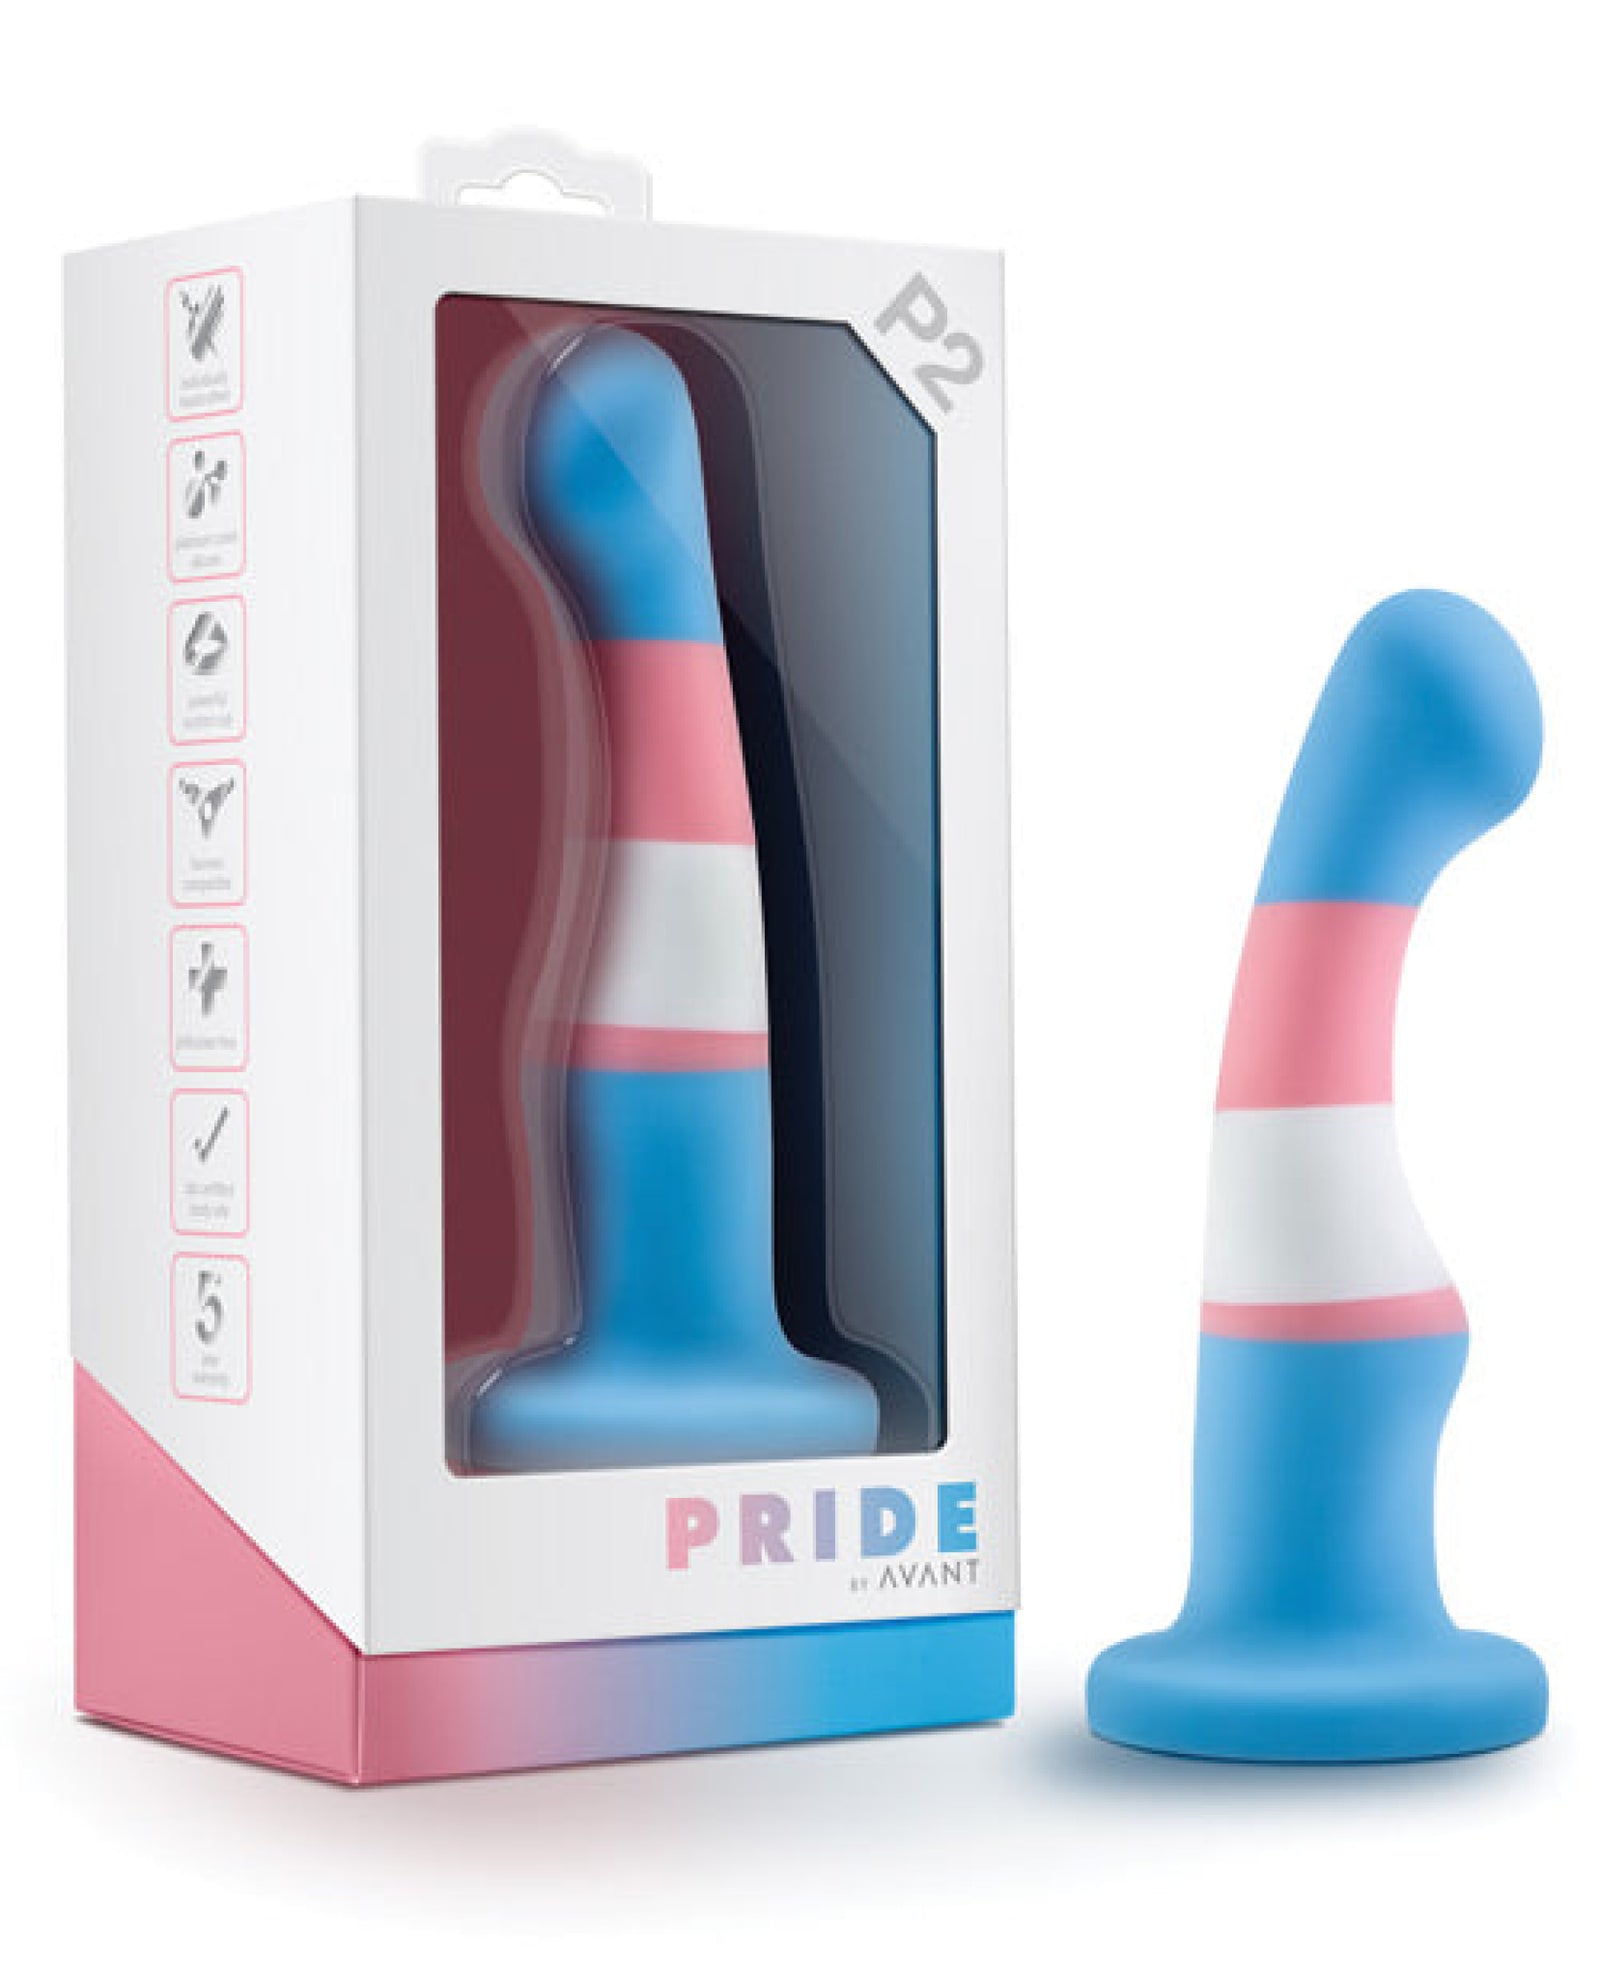 Blush Avant P2 Transgender Pride Silicone Dong - True Blue Blush